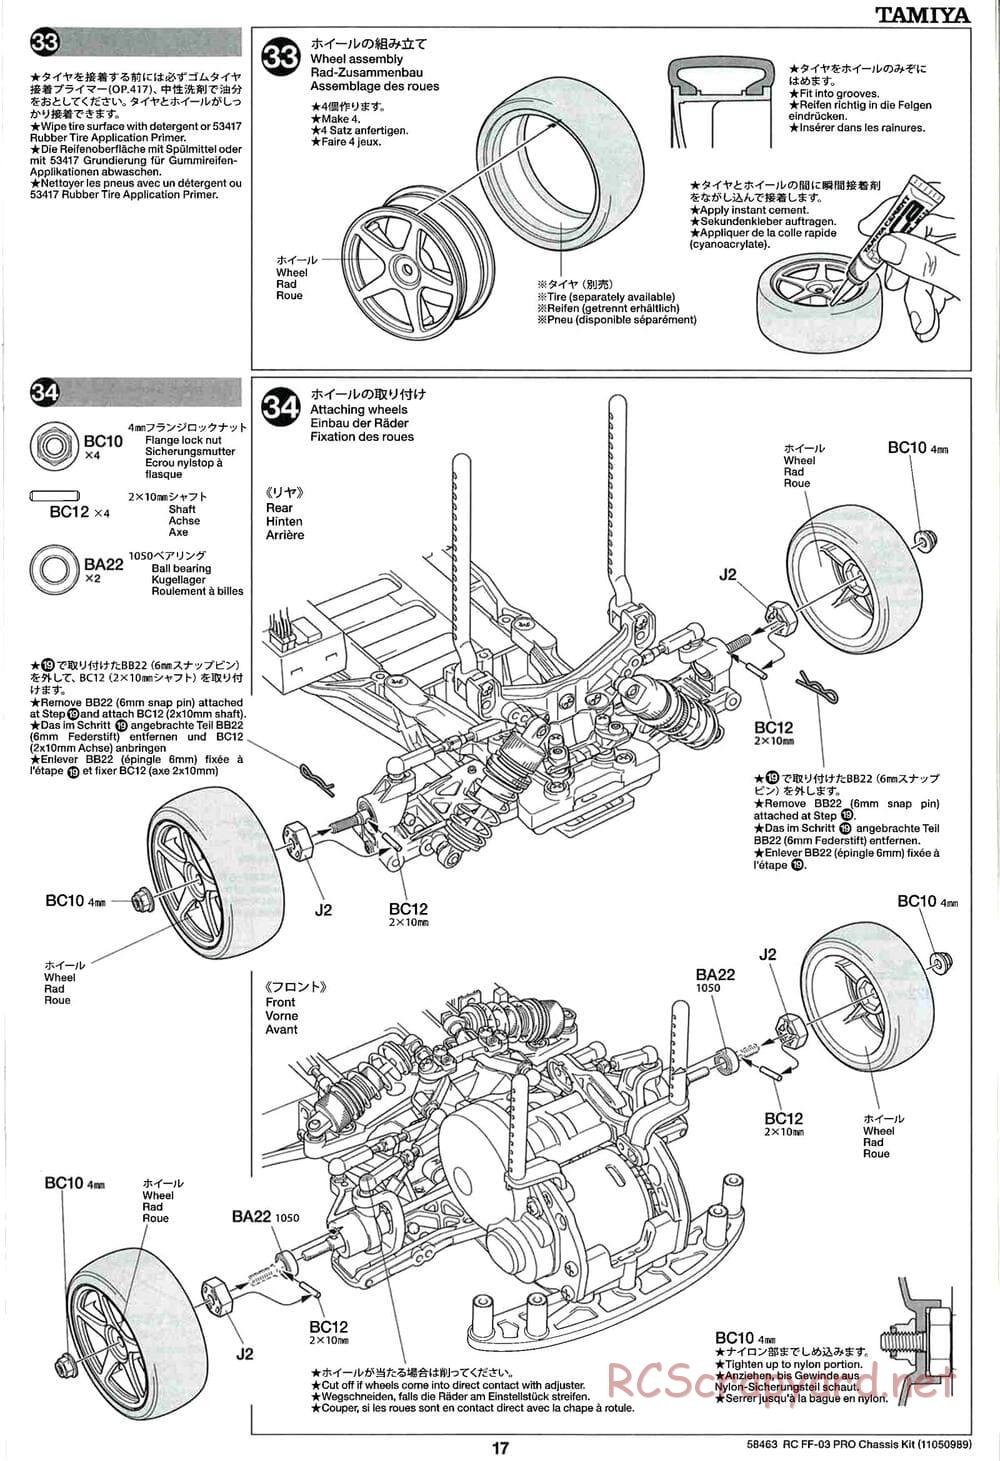 Tamiya - FF-03 Pro Chassis - Manual - Page 17